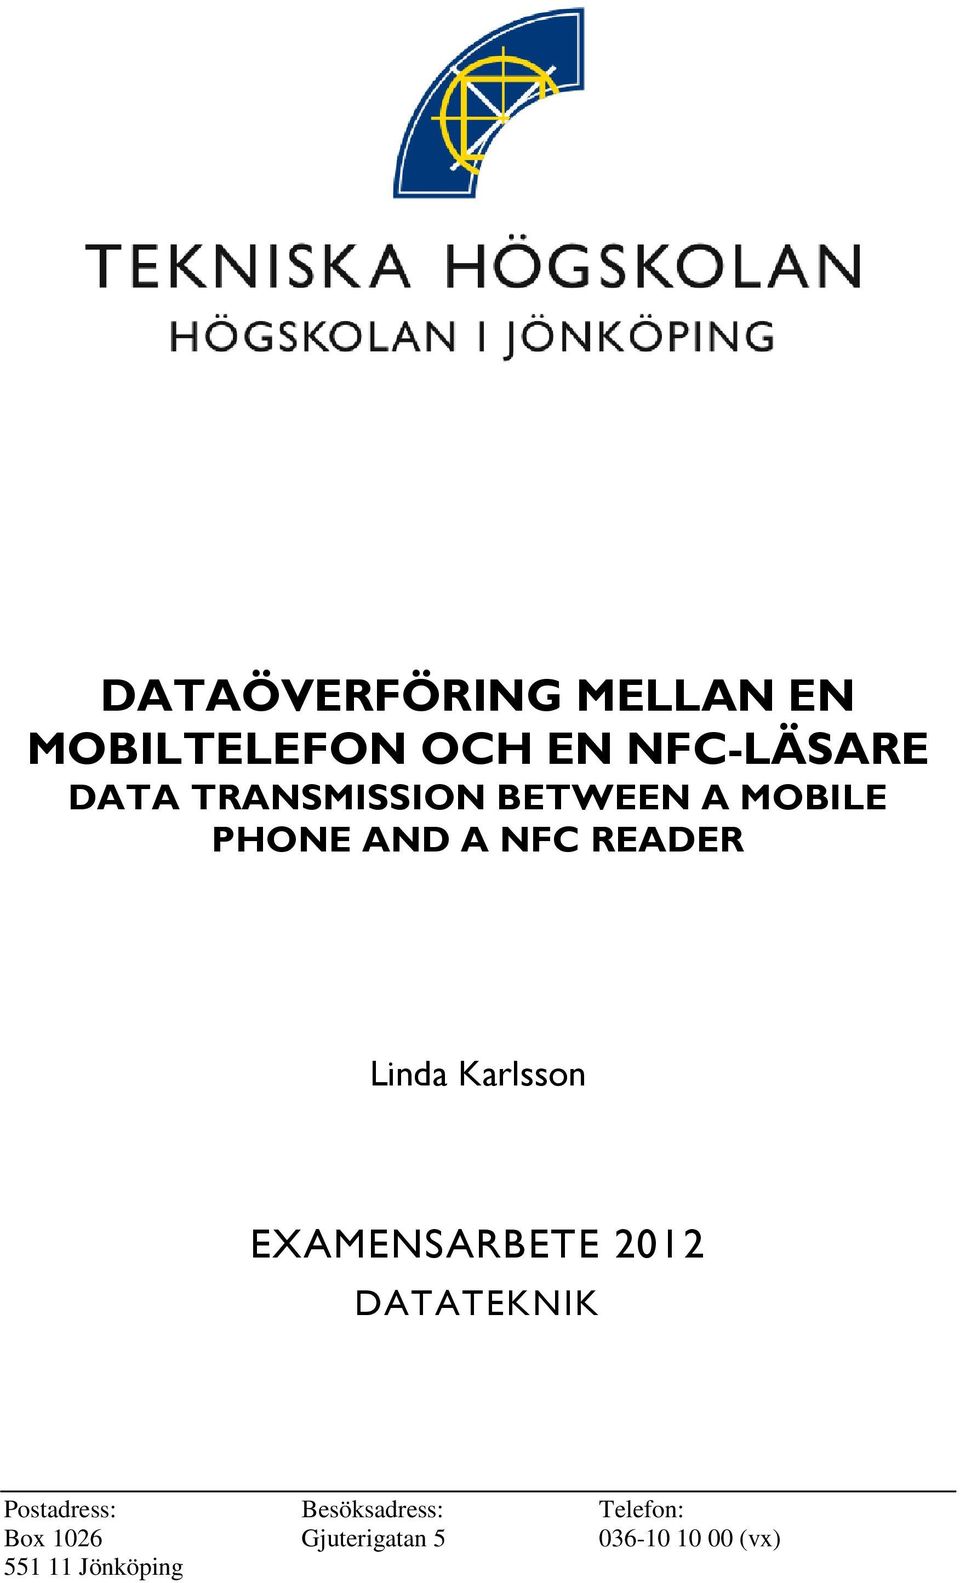 Karlsson EXAMENSARBETE 2012 DATATEKNIK Postadress: